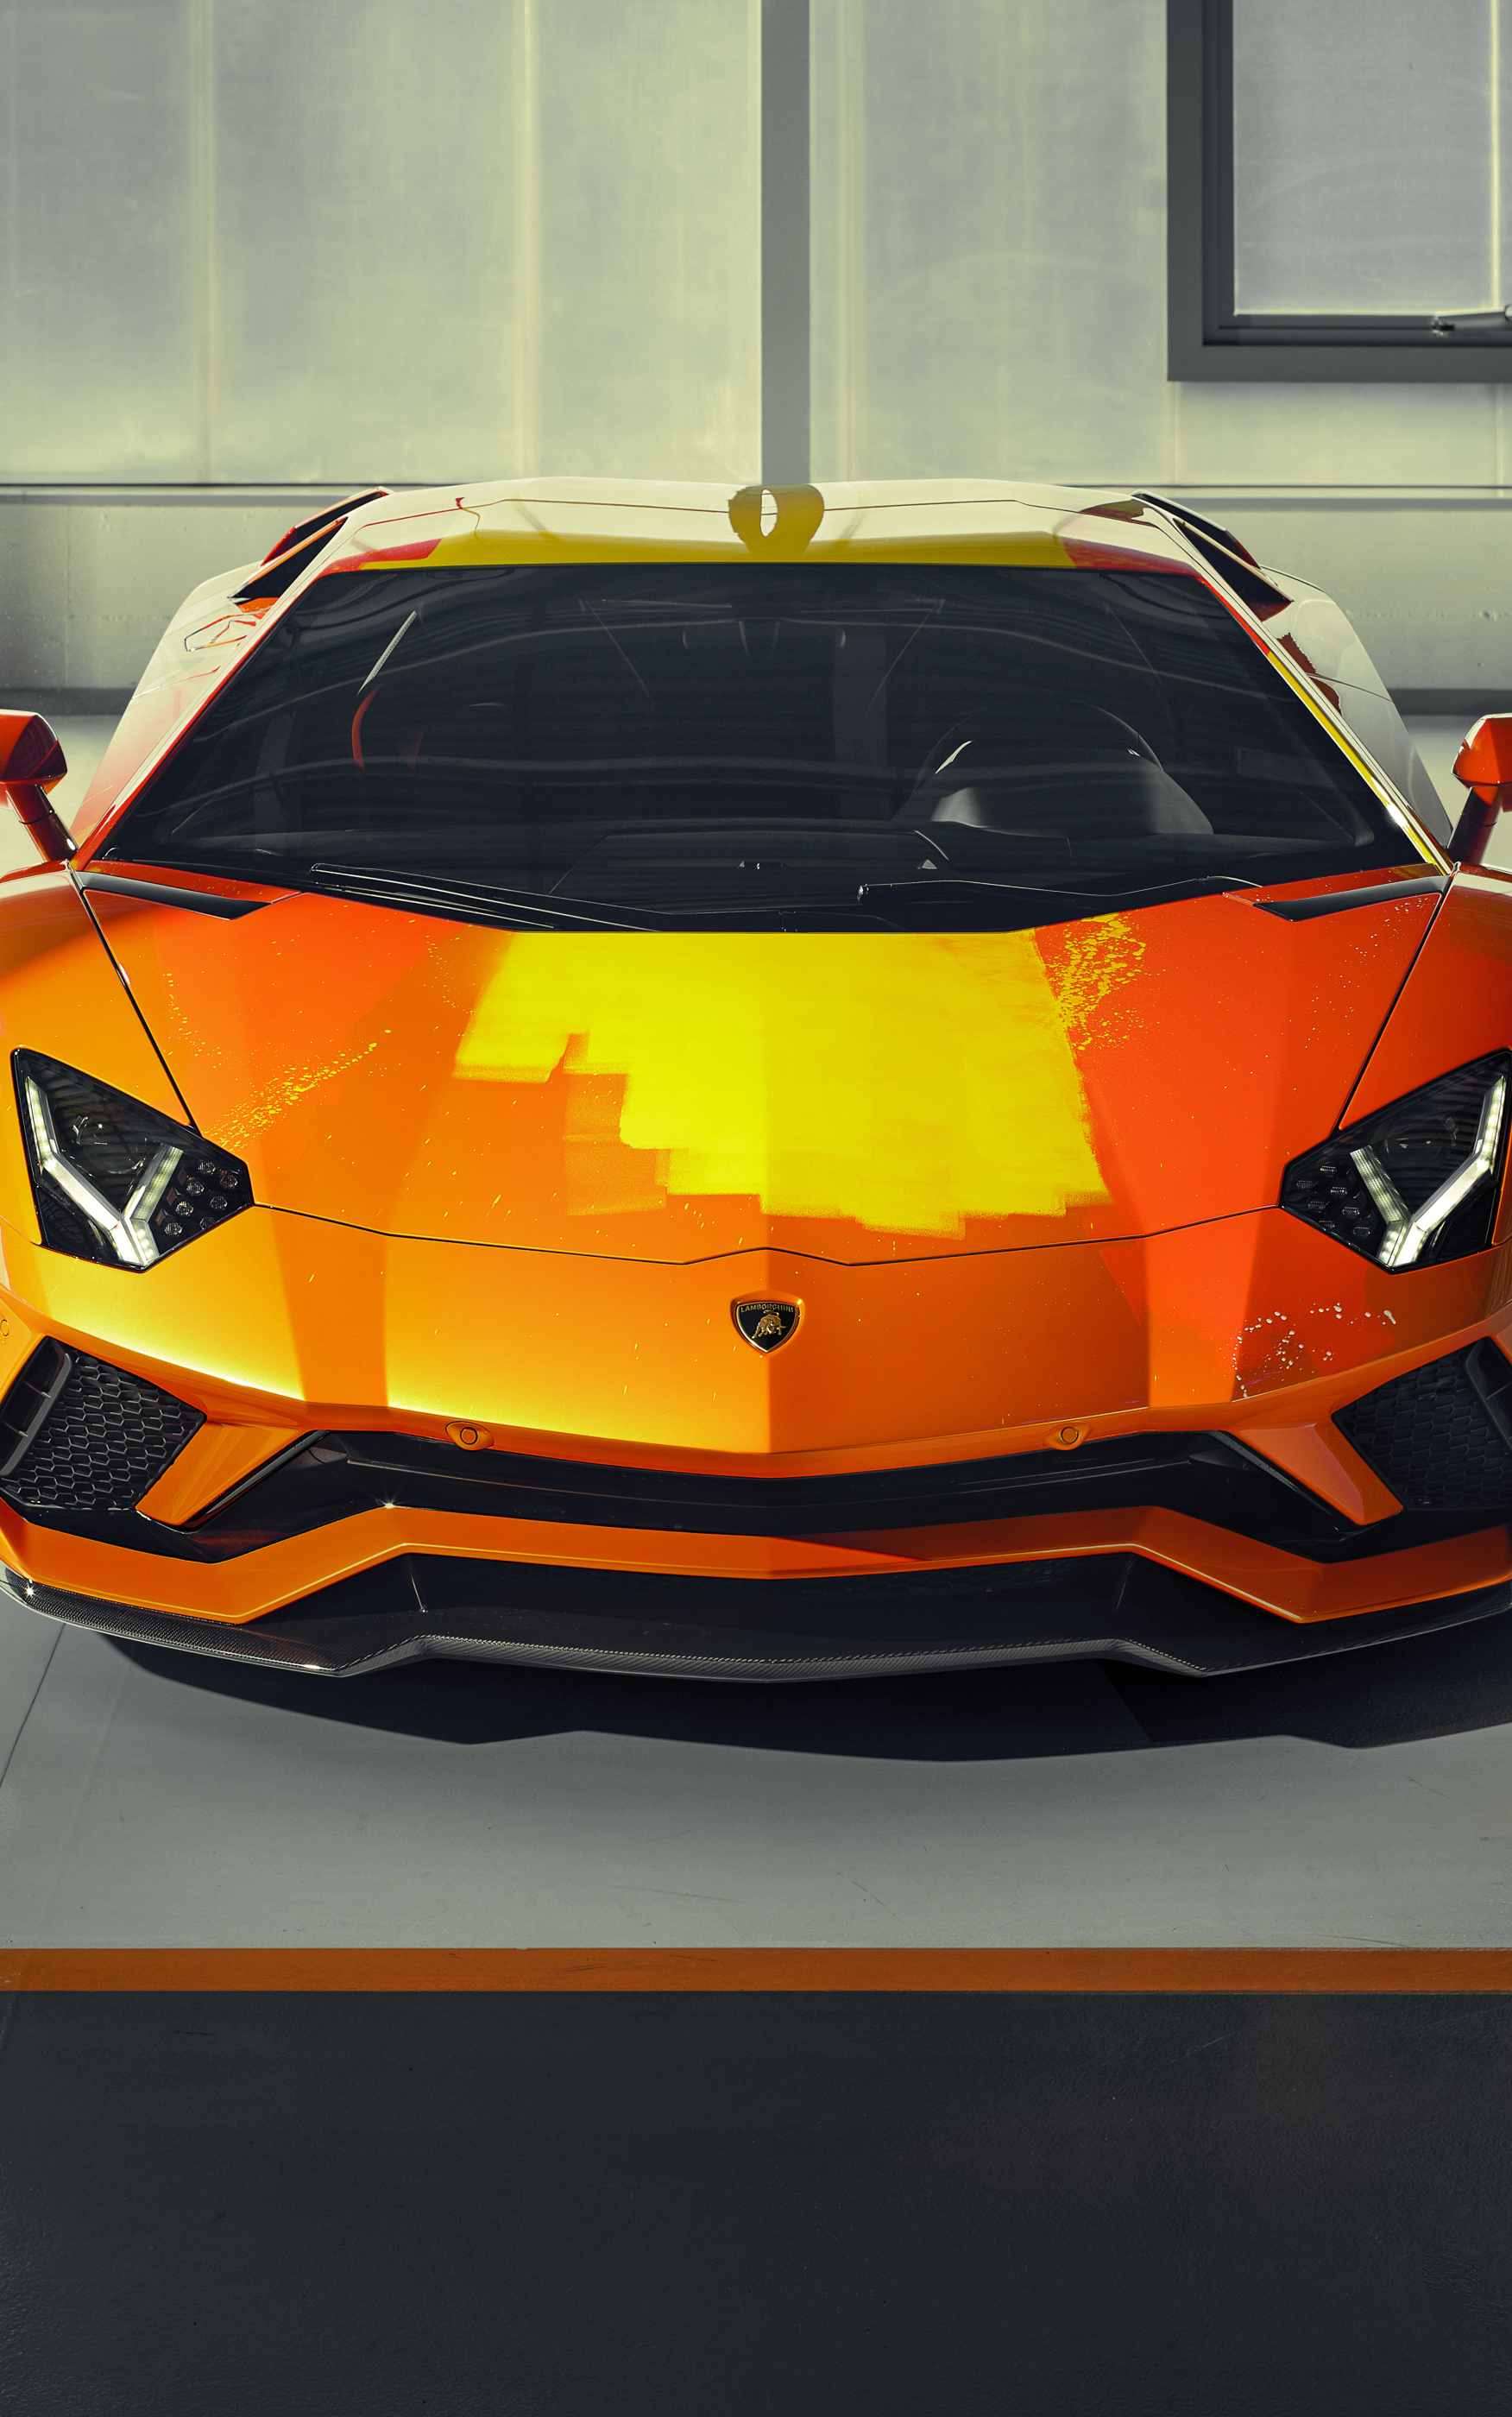 Descarga gratis la imagen Lamborghini, Coche, Superdeportivo, Lamborghini Aventador, Vehículos, Lamborghini Aventador S en el escritorio de tu PC